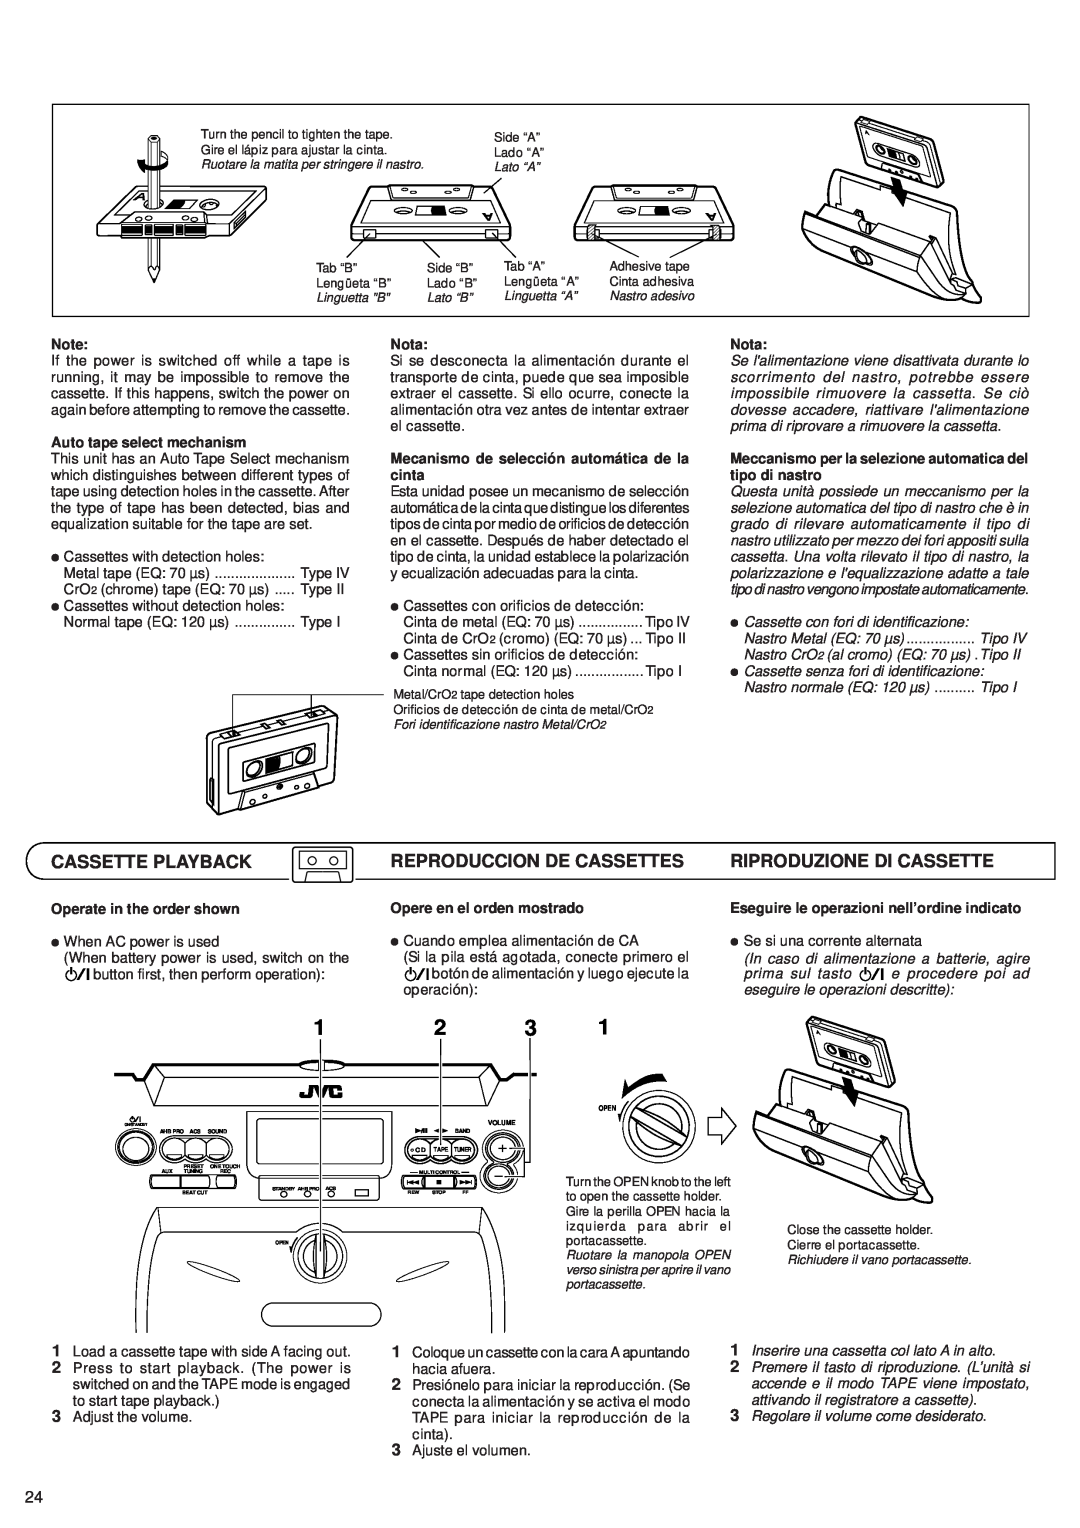 JVC RV-B55 GY/BU/LTD Cassette Playback, Reproduccion De Cassettes, Riproduzione Di Cassette, Auto tape select mechanism 